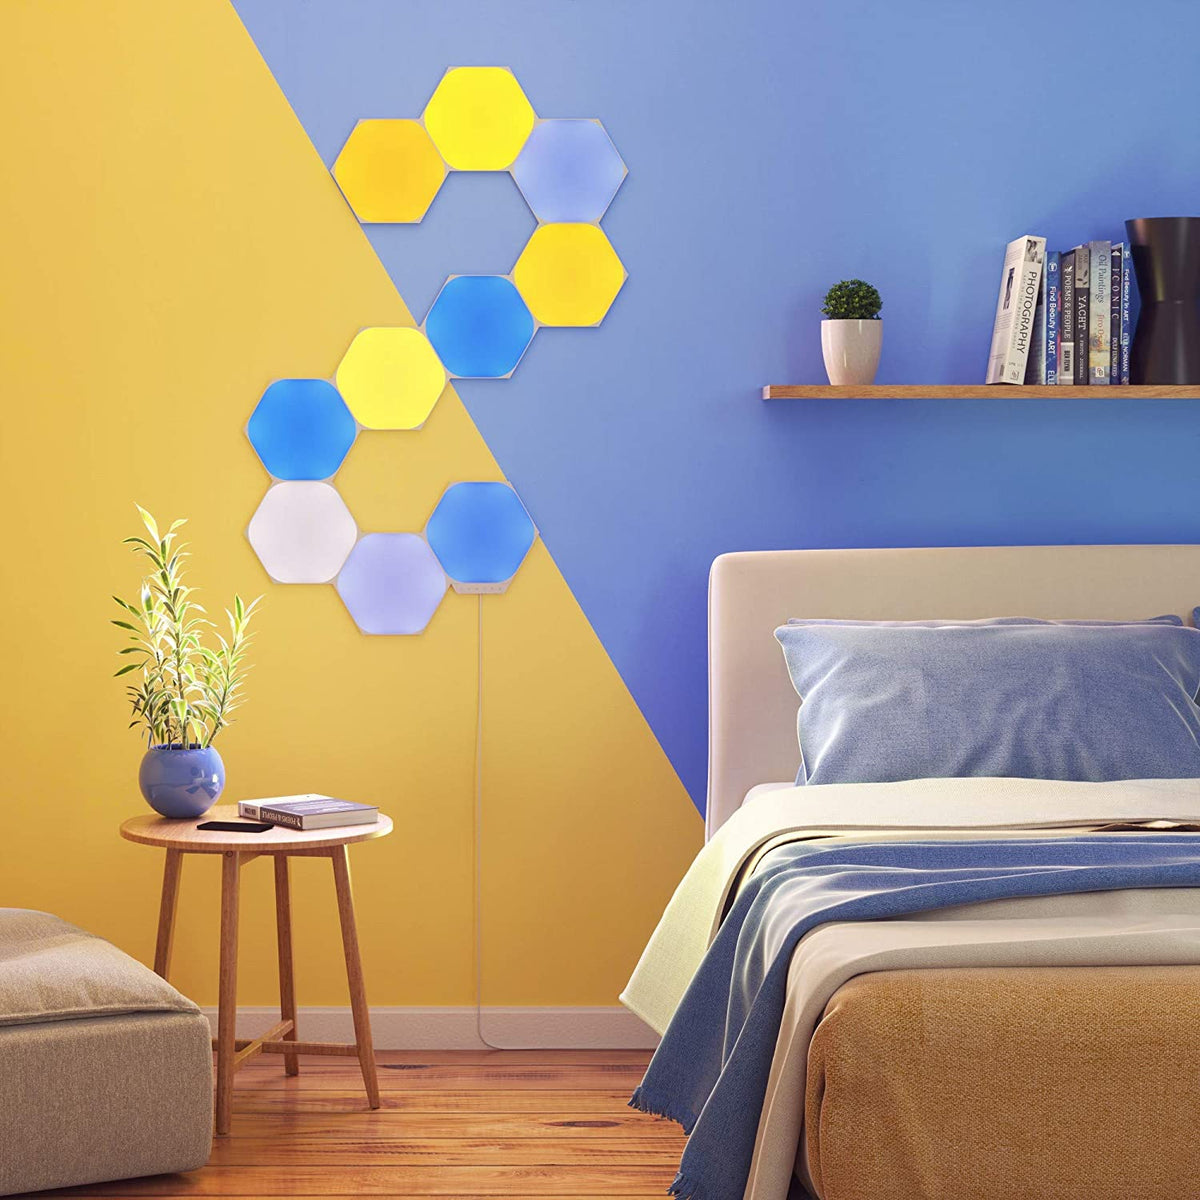 NANOLEAF Shapes Hexagons Starter Kit - Smart WiFi LED Panel System w/ Music Visualizer - 9 Pack - White + FREE Installation in UAE